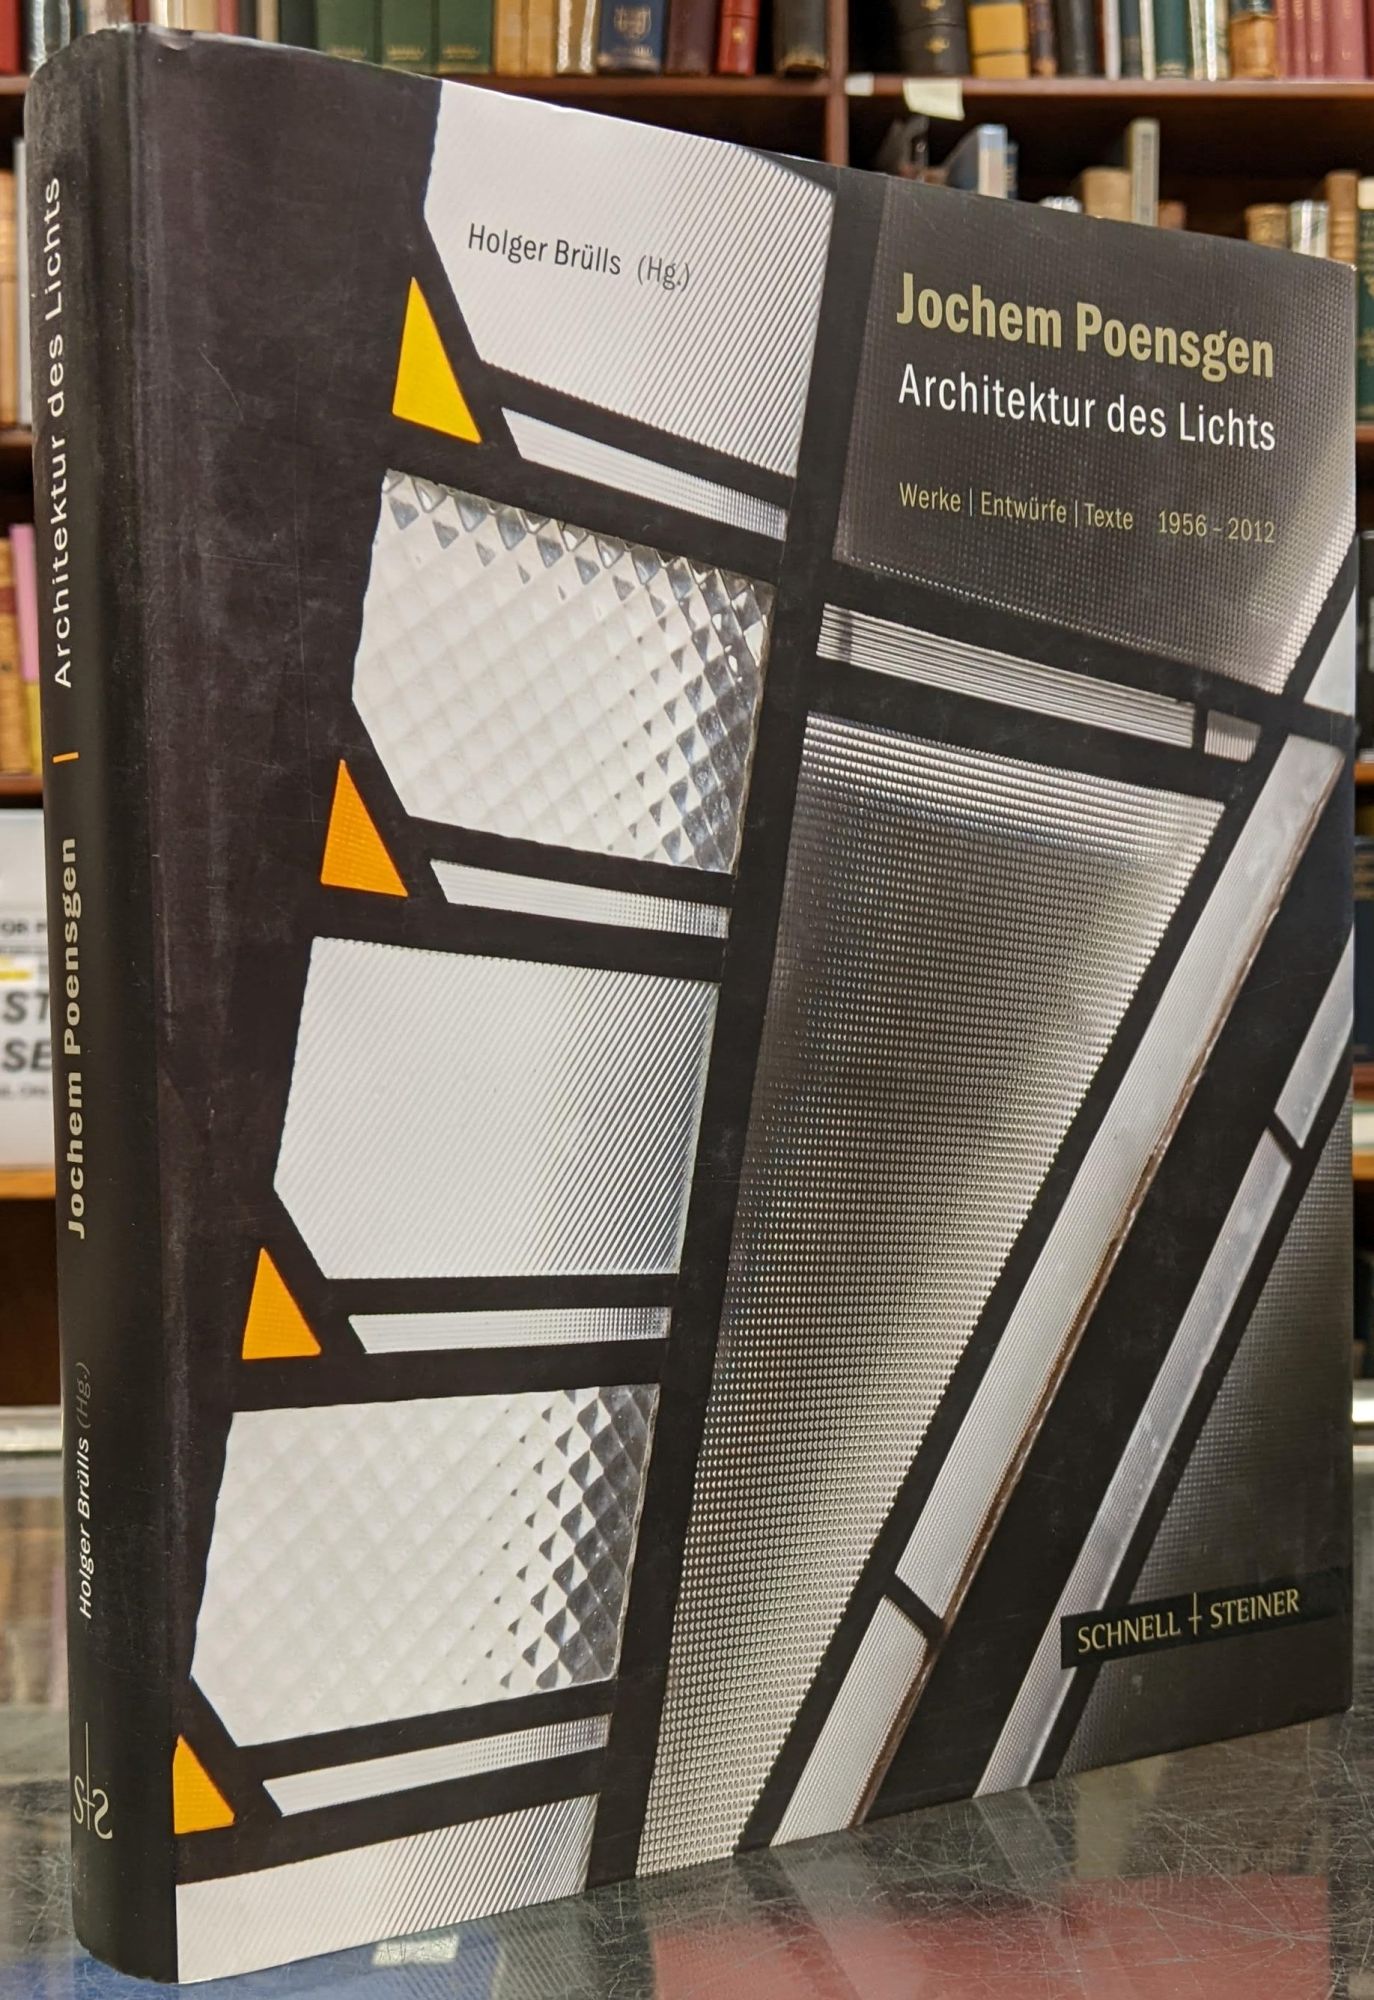 Jochem Poensgen, Architektur des Lichts: Werke / Entwurfe / Texte 1956-2012 - Jochem Poensgen; Holger Brulls (ed)